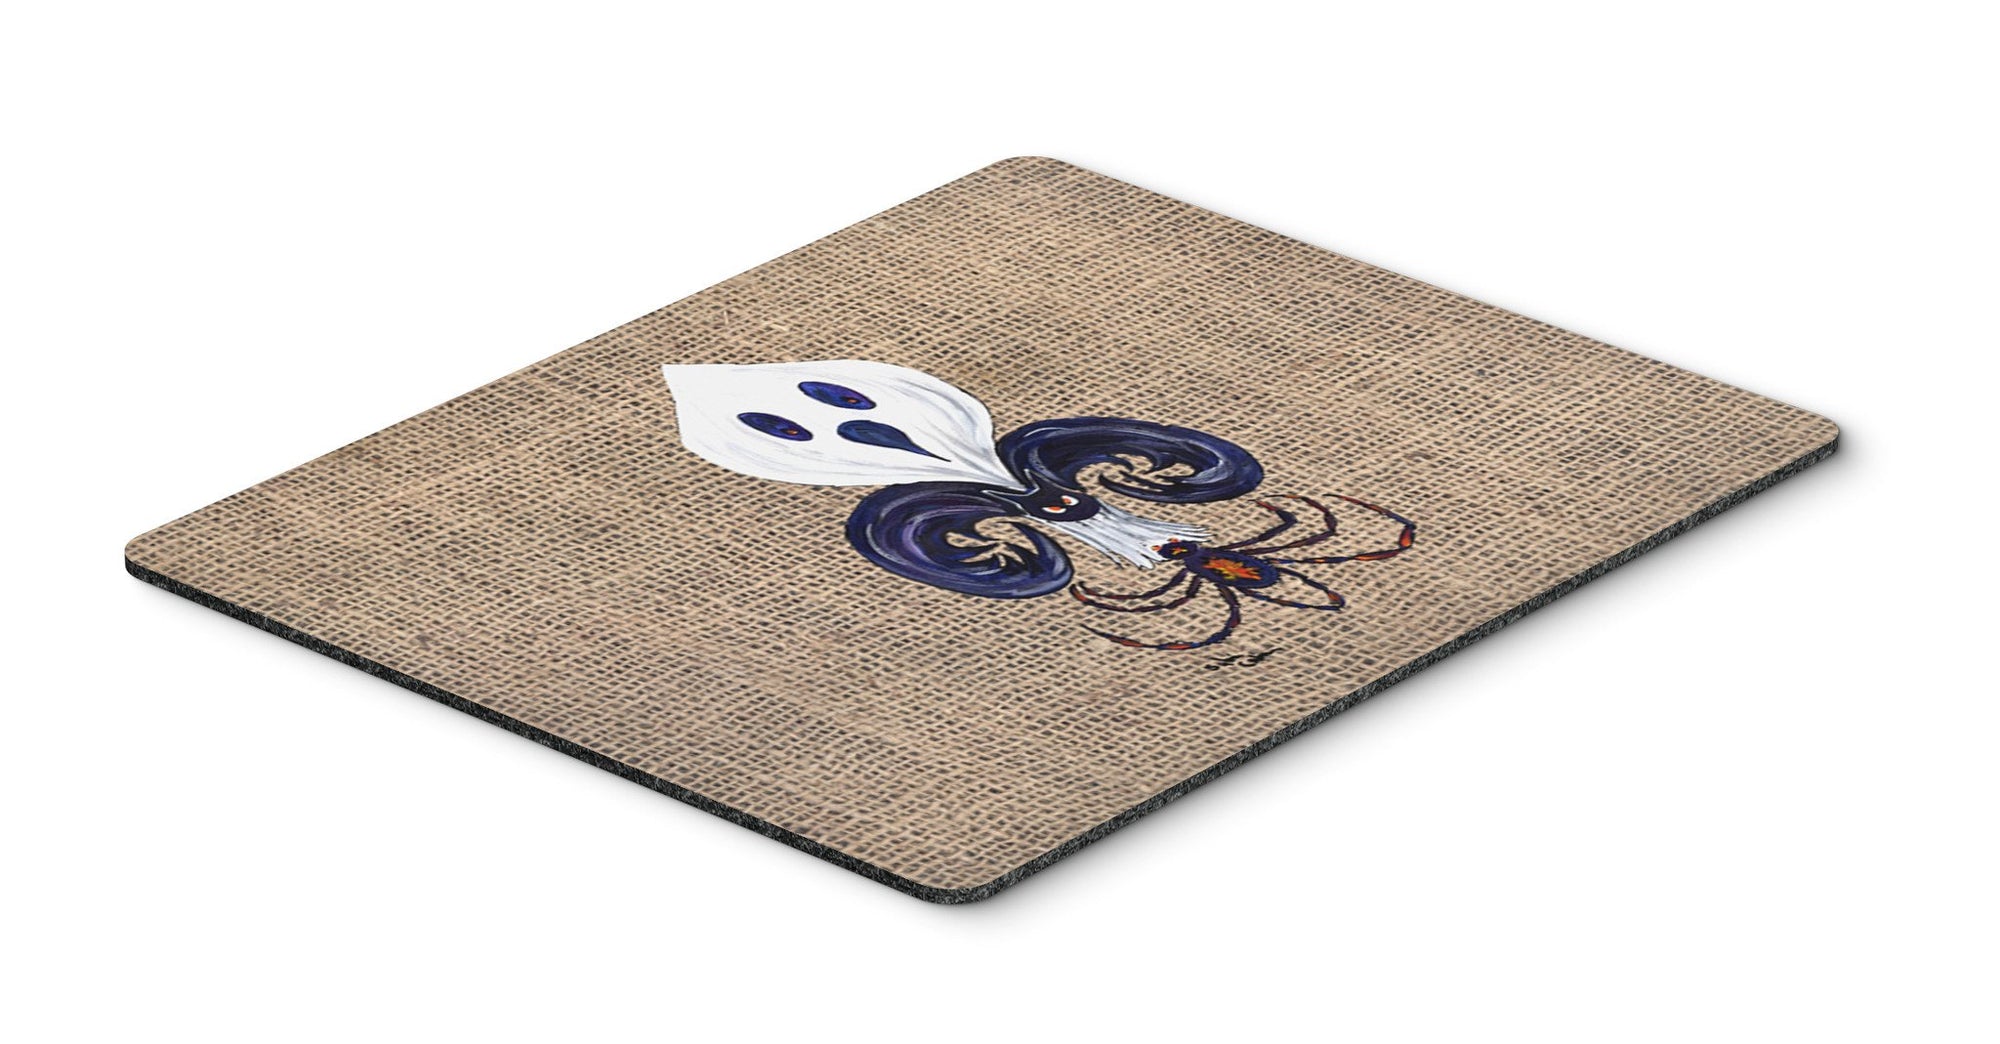 Halloween Ghost Spider Bat Fleur de lis Mouse pad, hot pad, or trivet by Caroline's Treasures